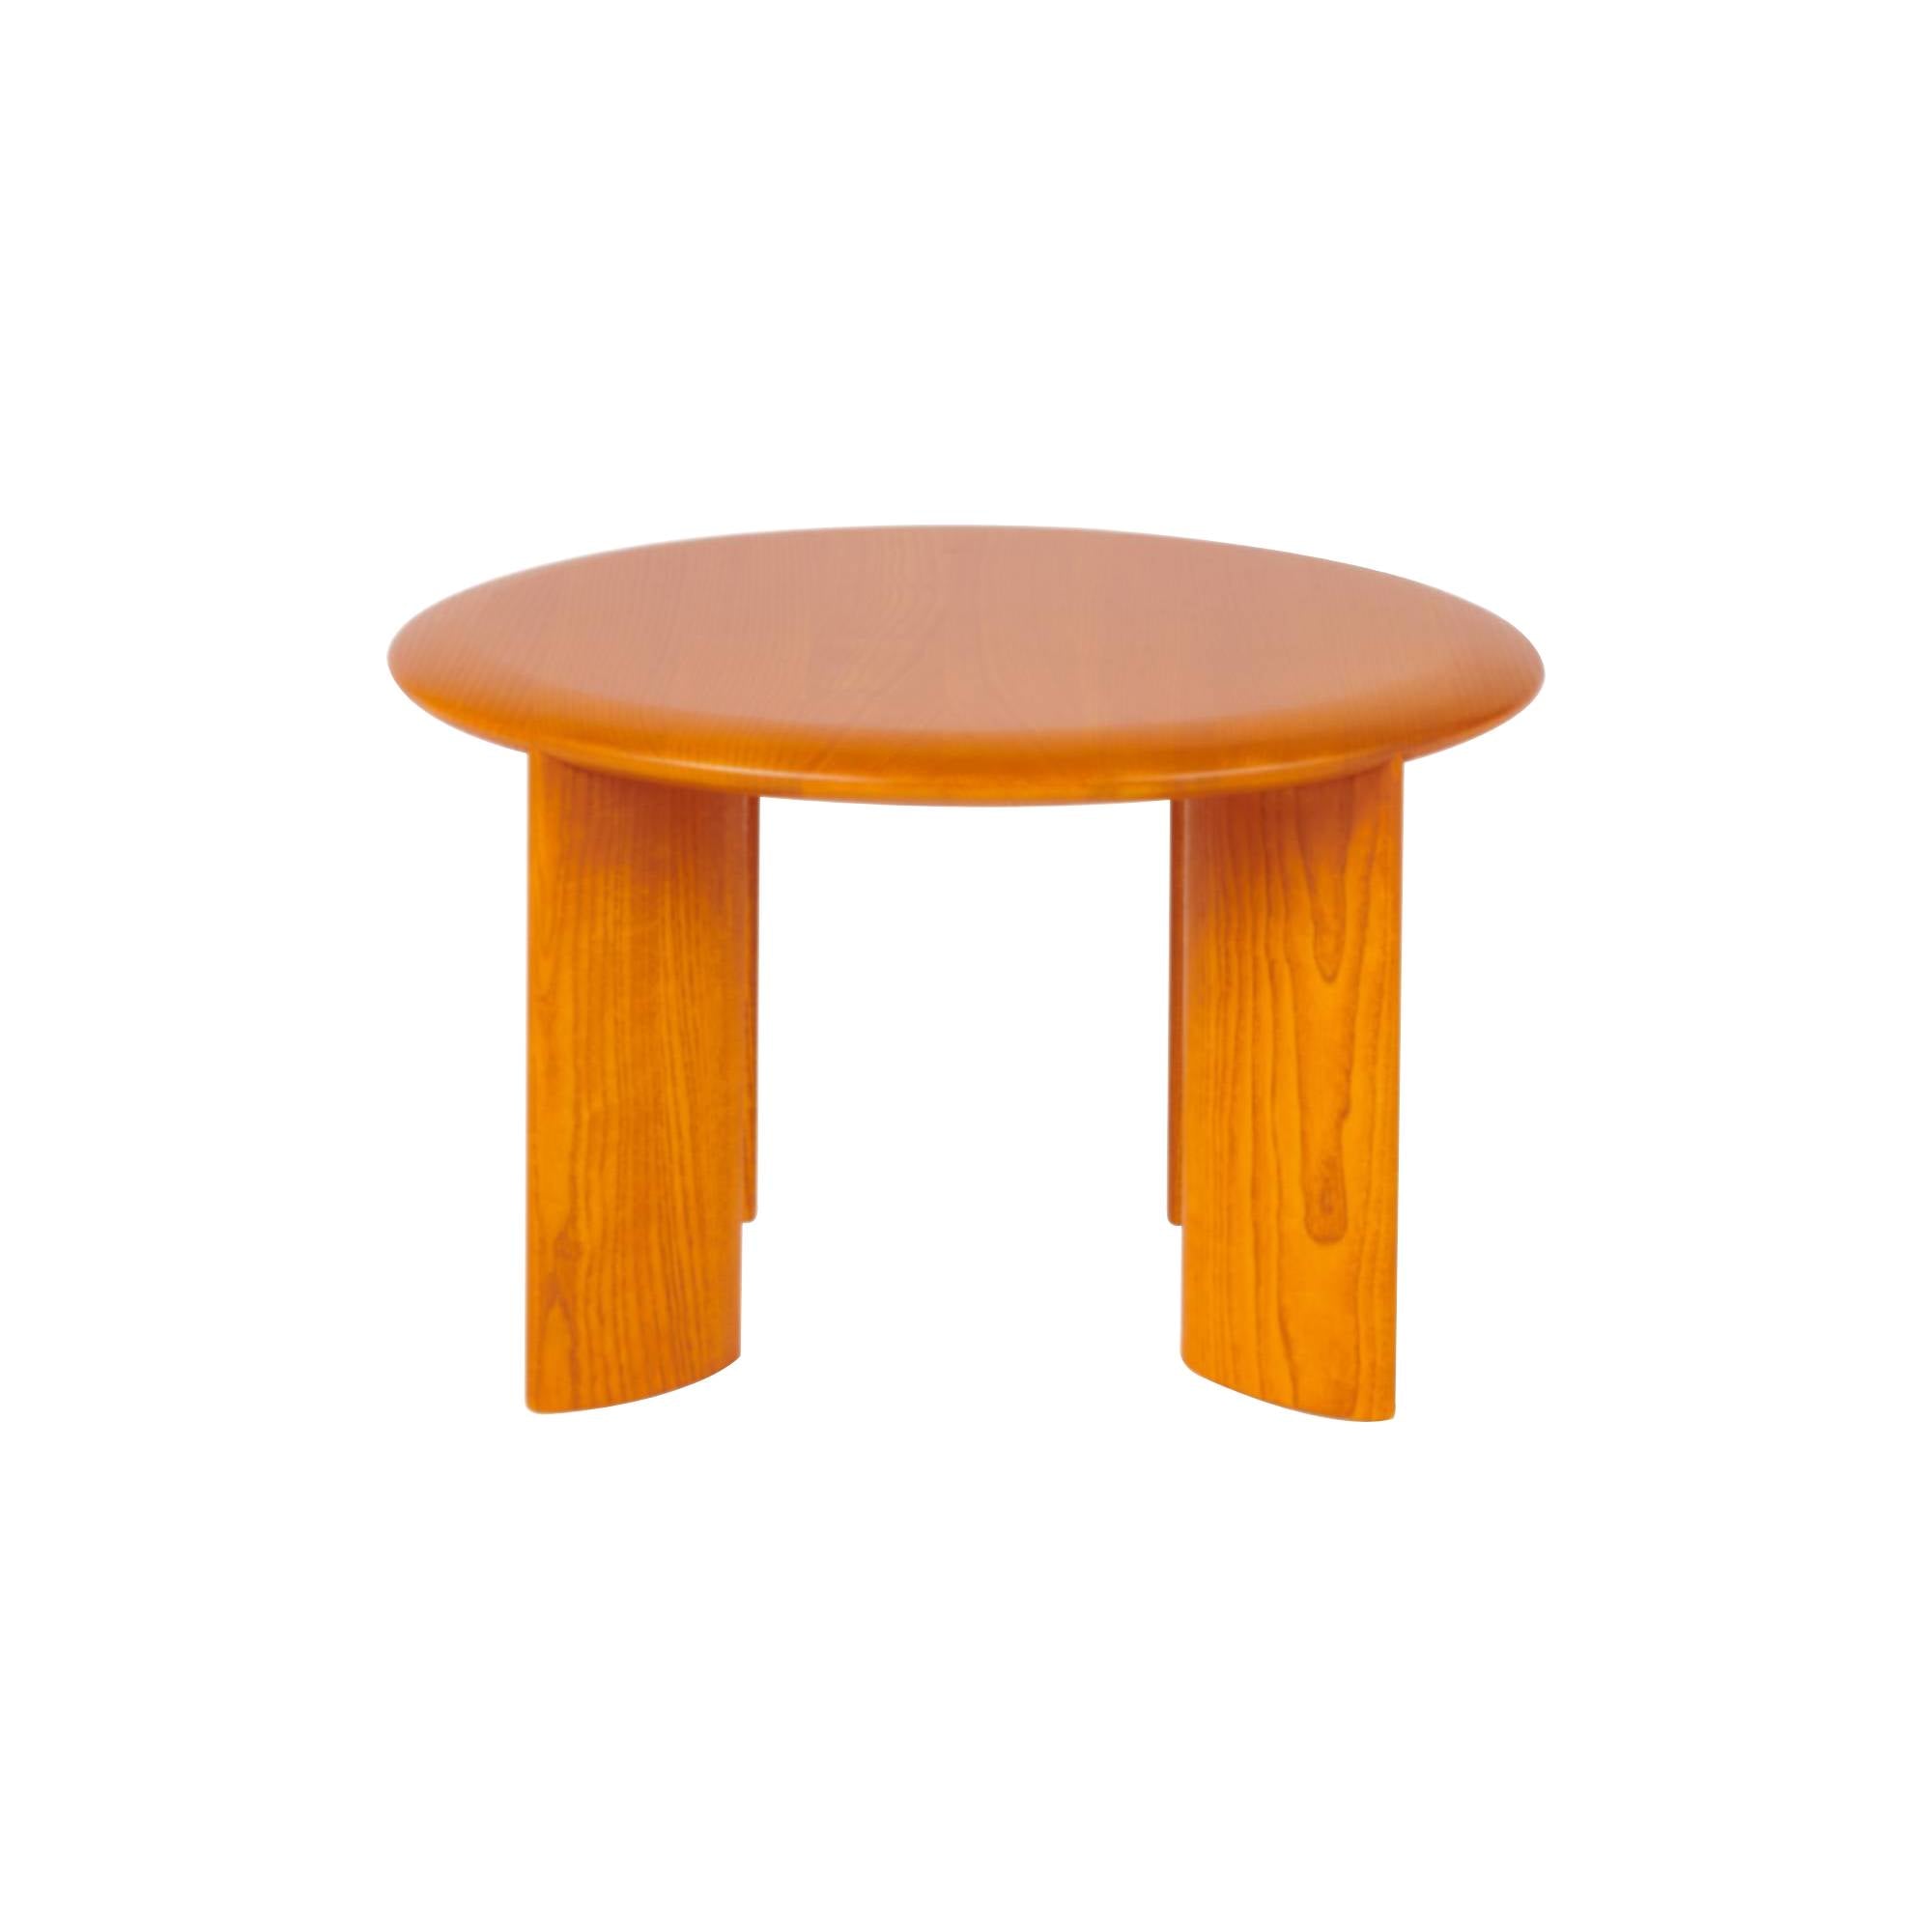 IO Side Table: Ochre